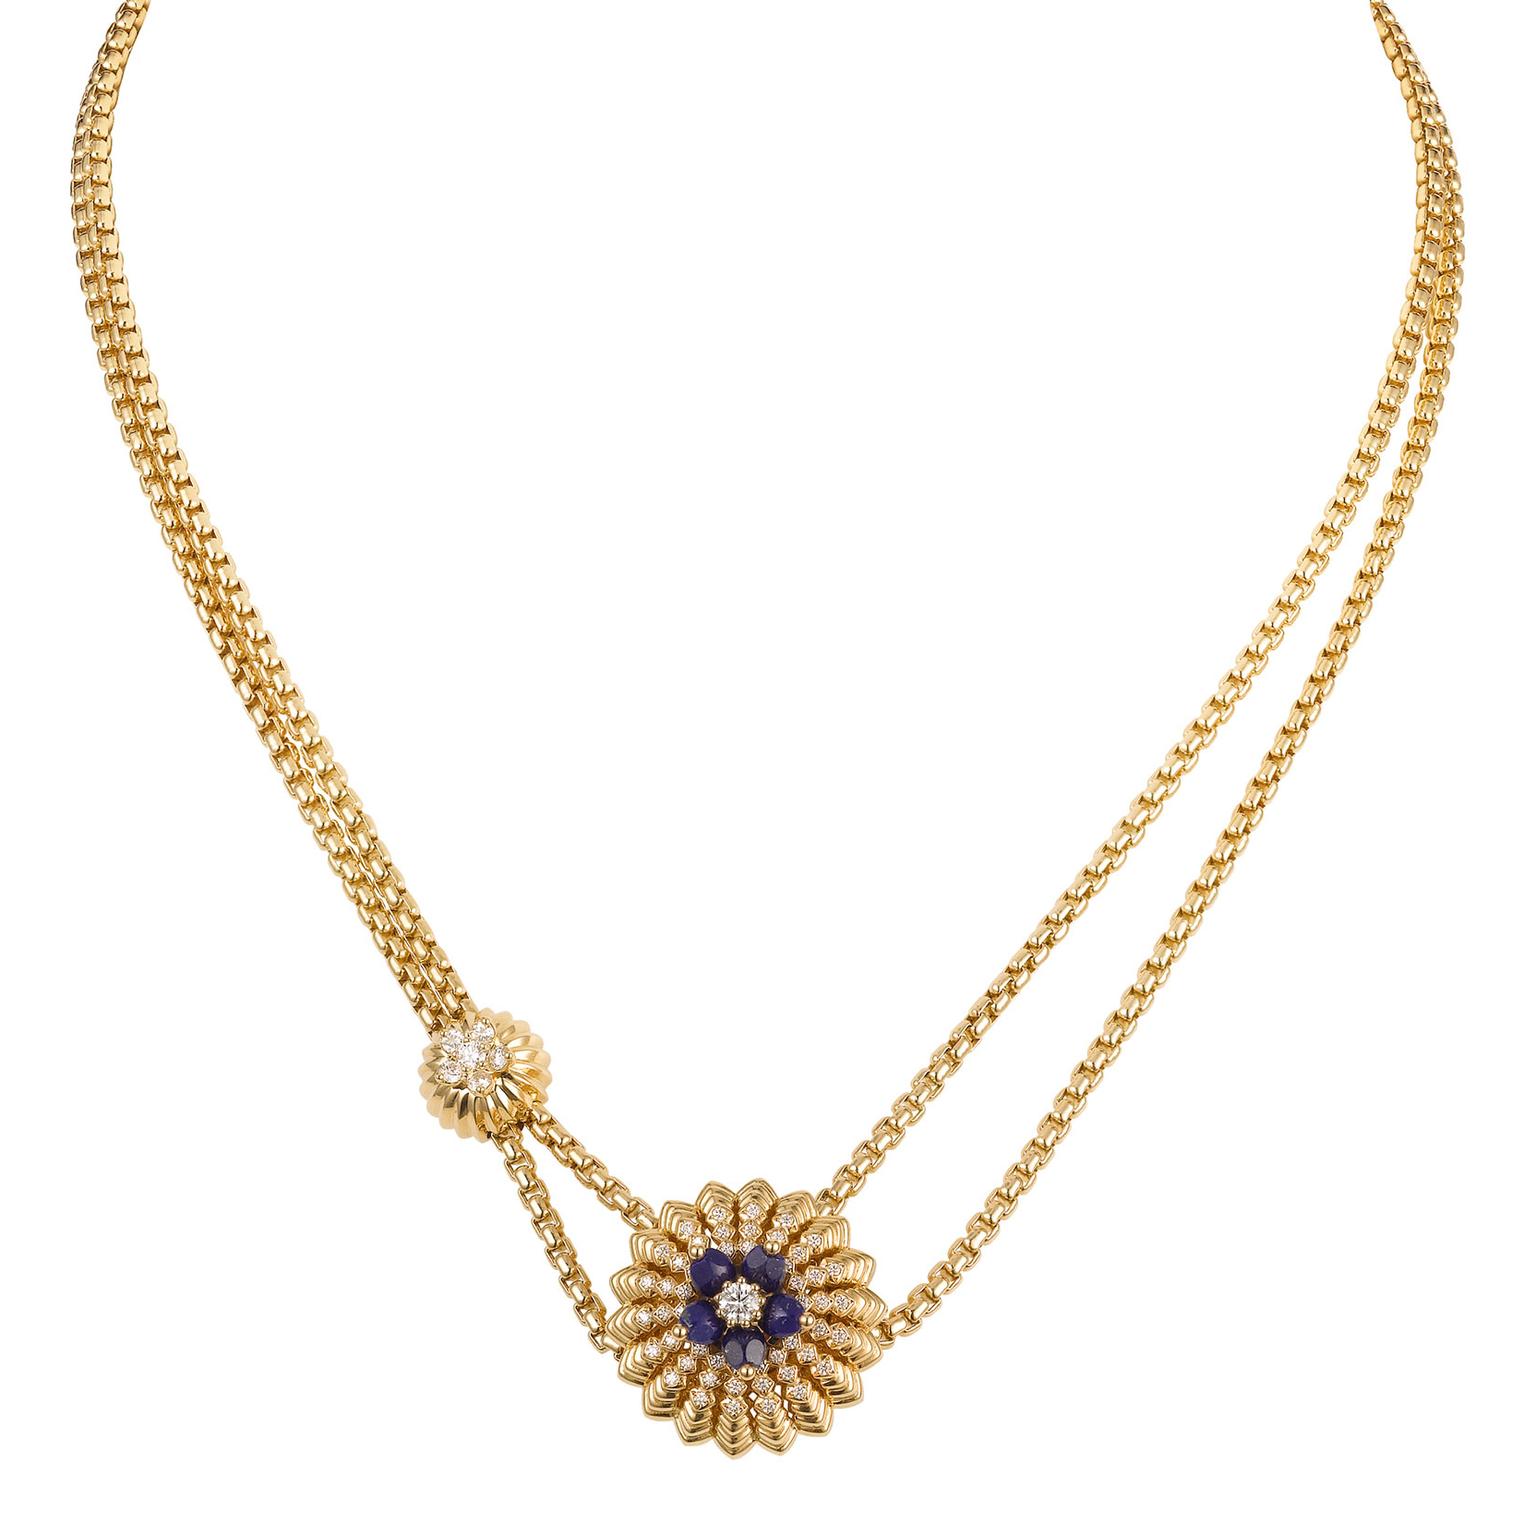 Cactus de Cartier yellow gold necklace with diamonds and lapis lazuli flowers